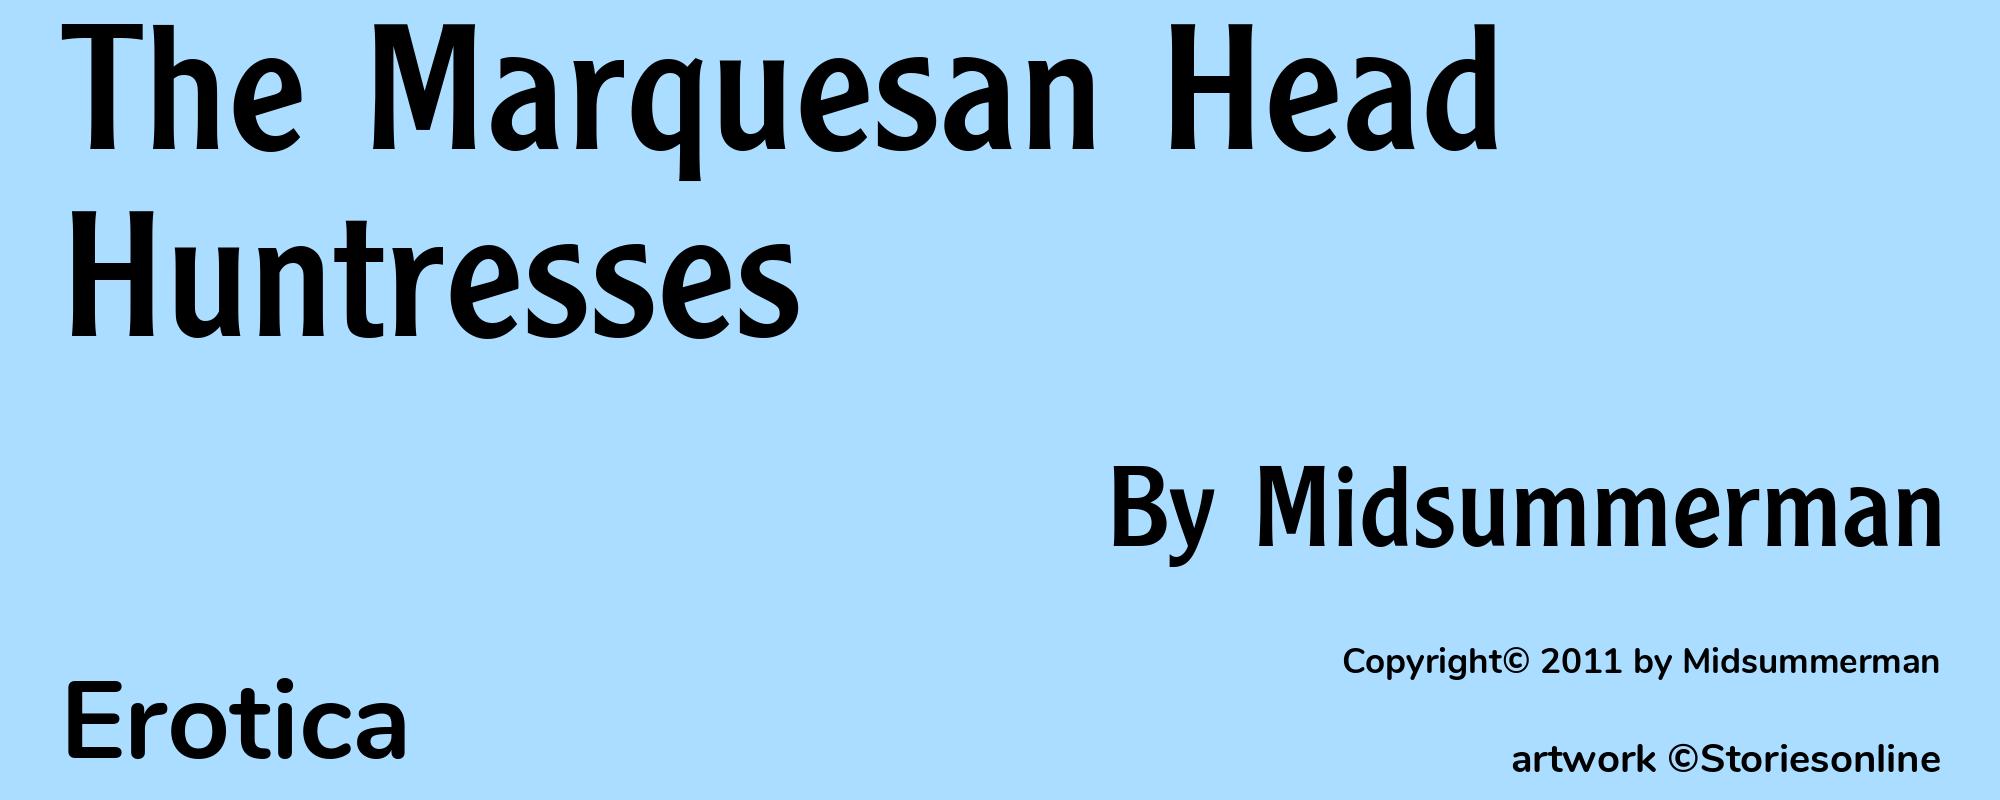 The Marquesan Head Huntresses - Cover